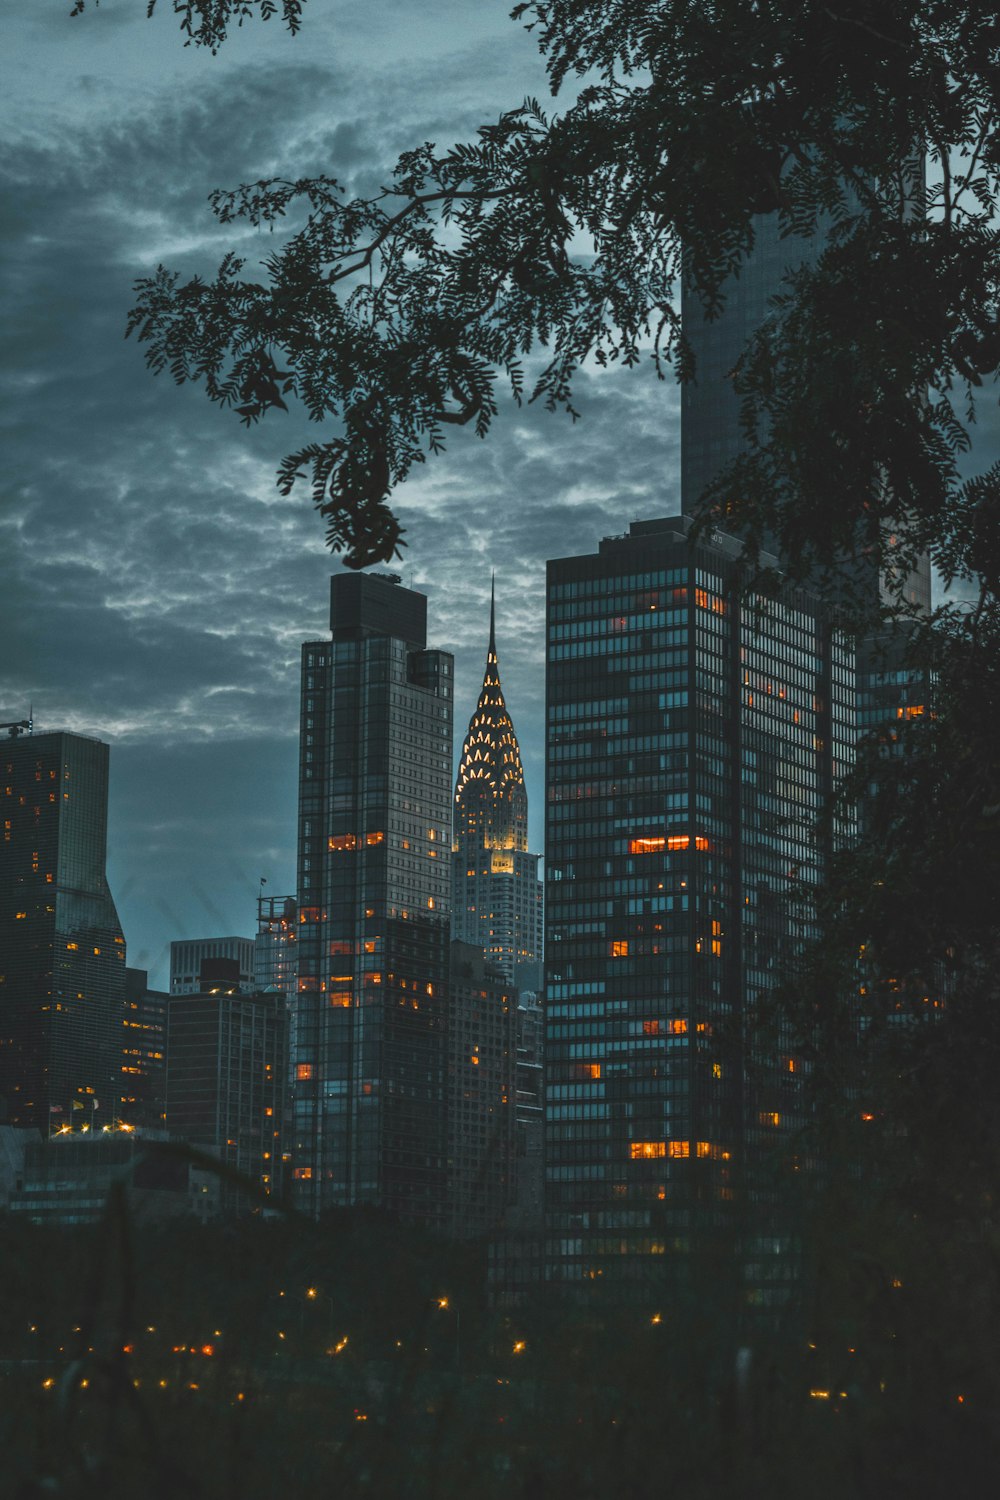 city lights at nighttime